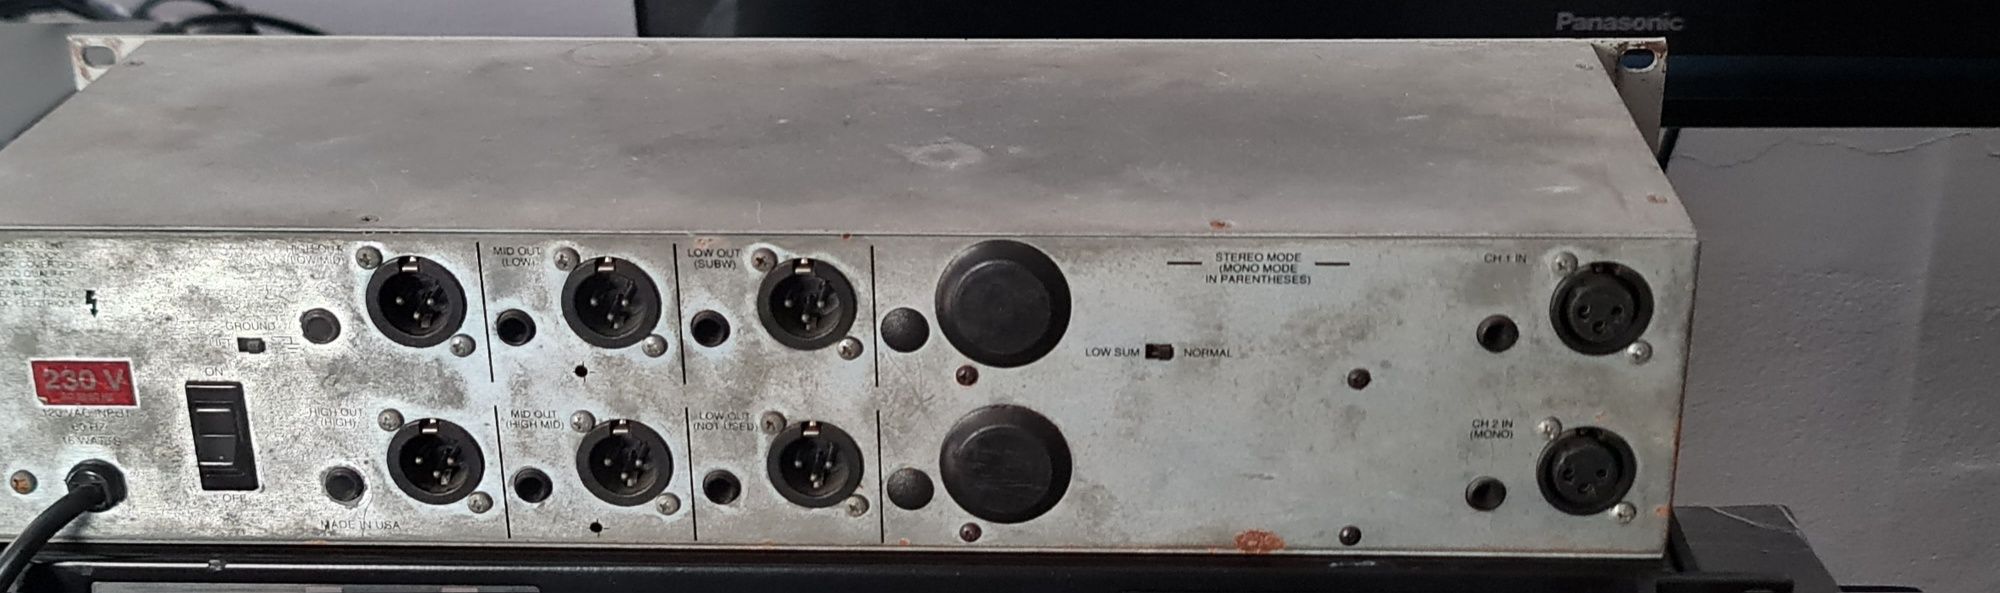 Crossover Furman X-424 (trei căi stereo) Nu DBX, Nu Rane, Nu Dynacord